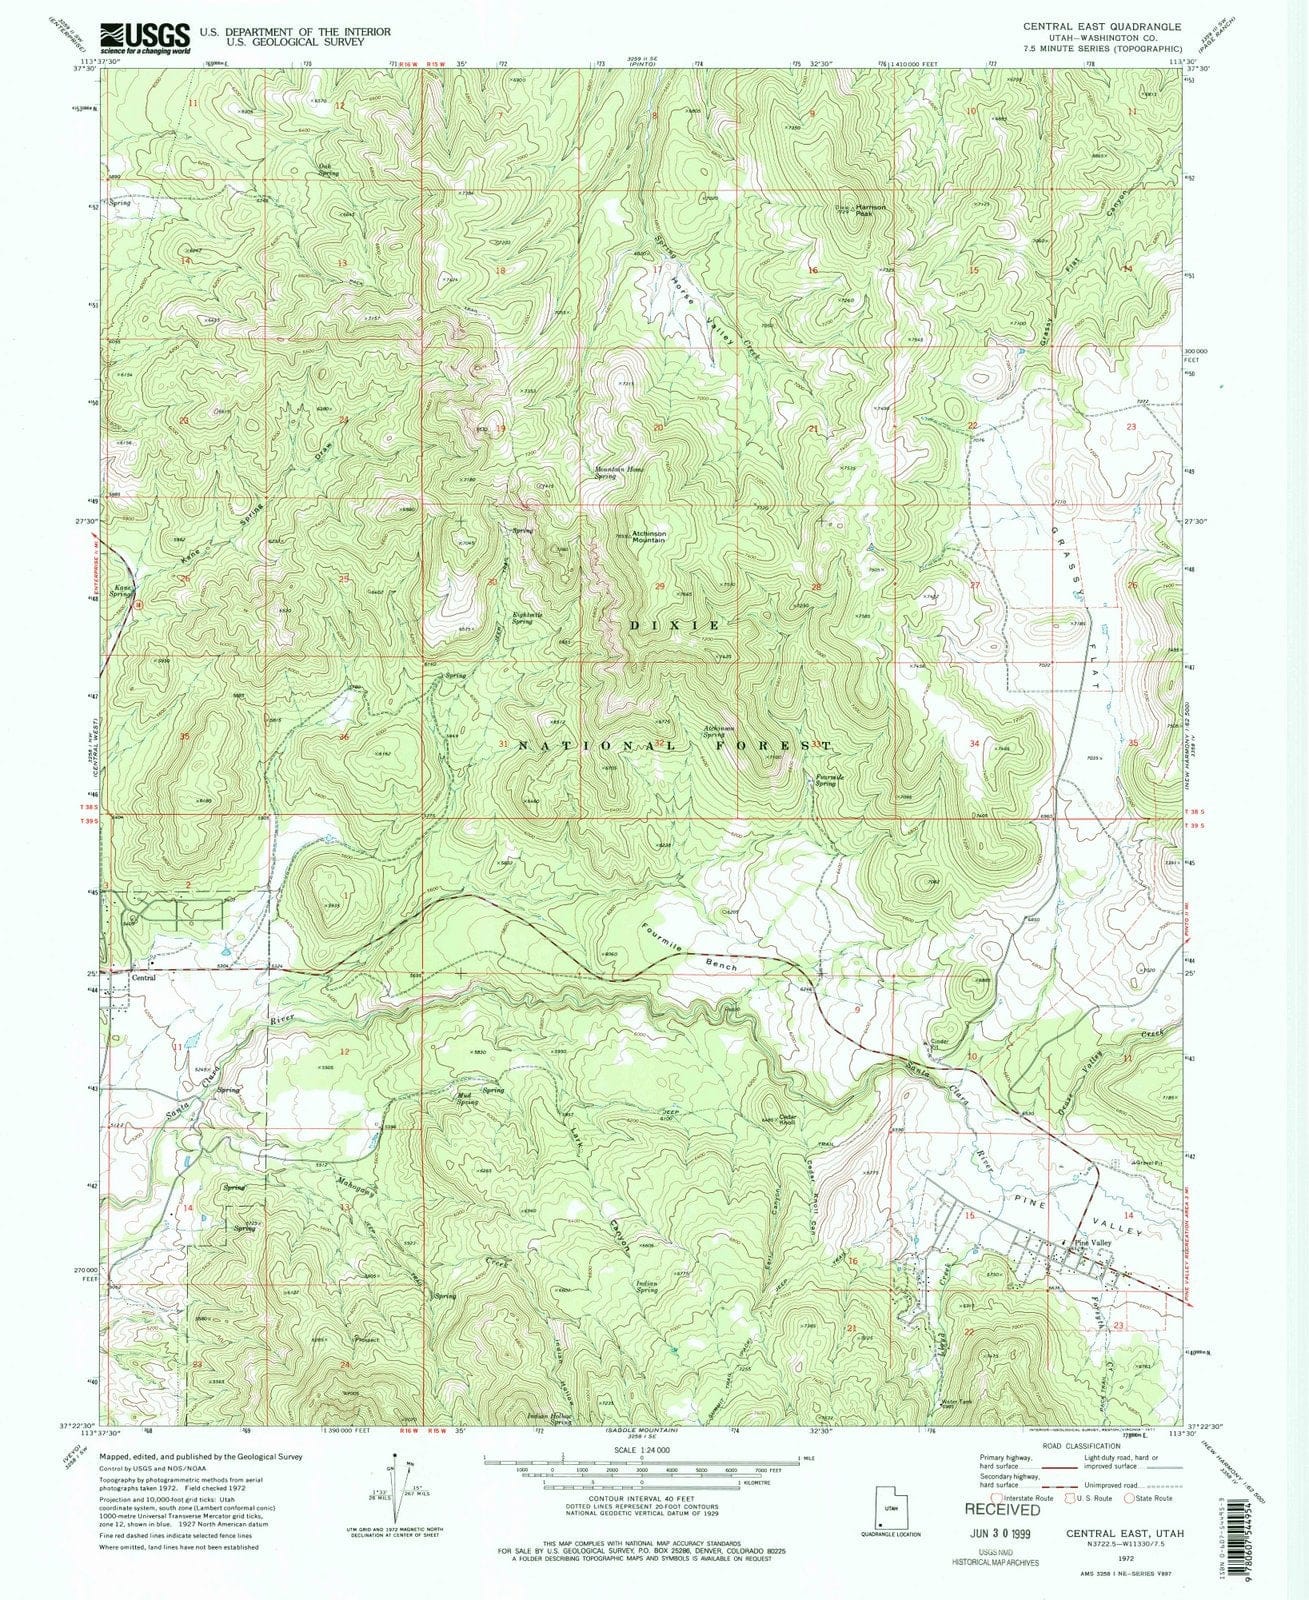 1972 Central East, UT - Utah - USGS Topographic Map